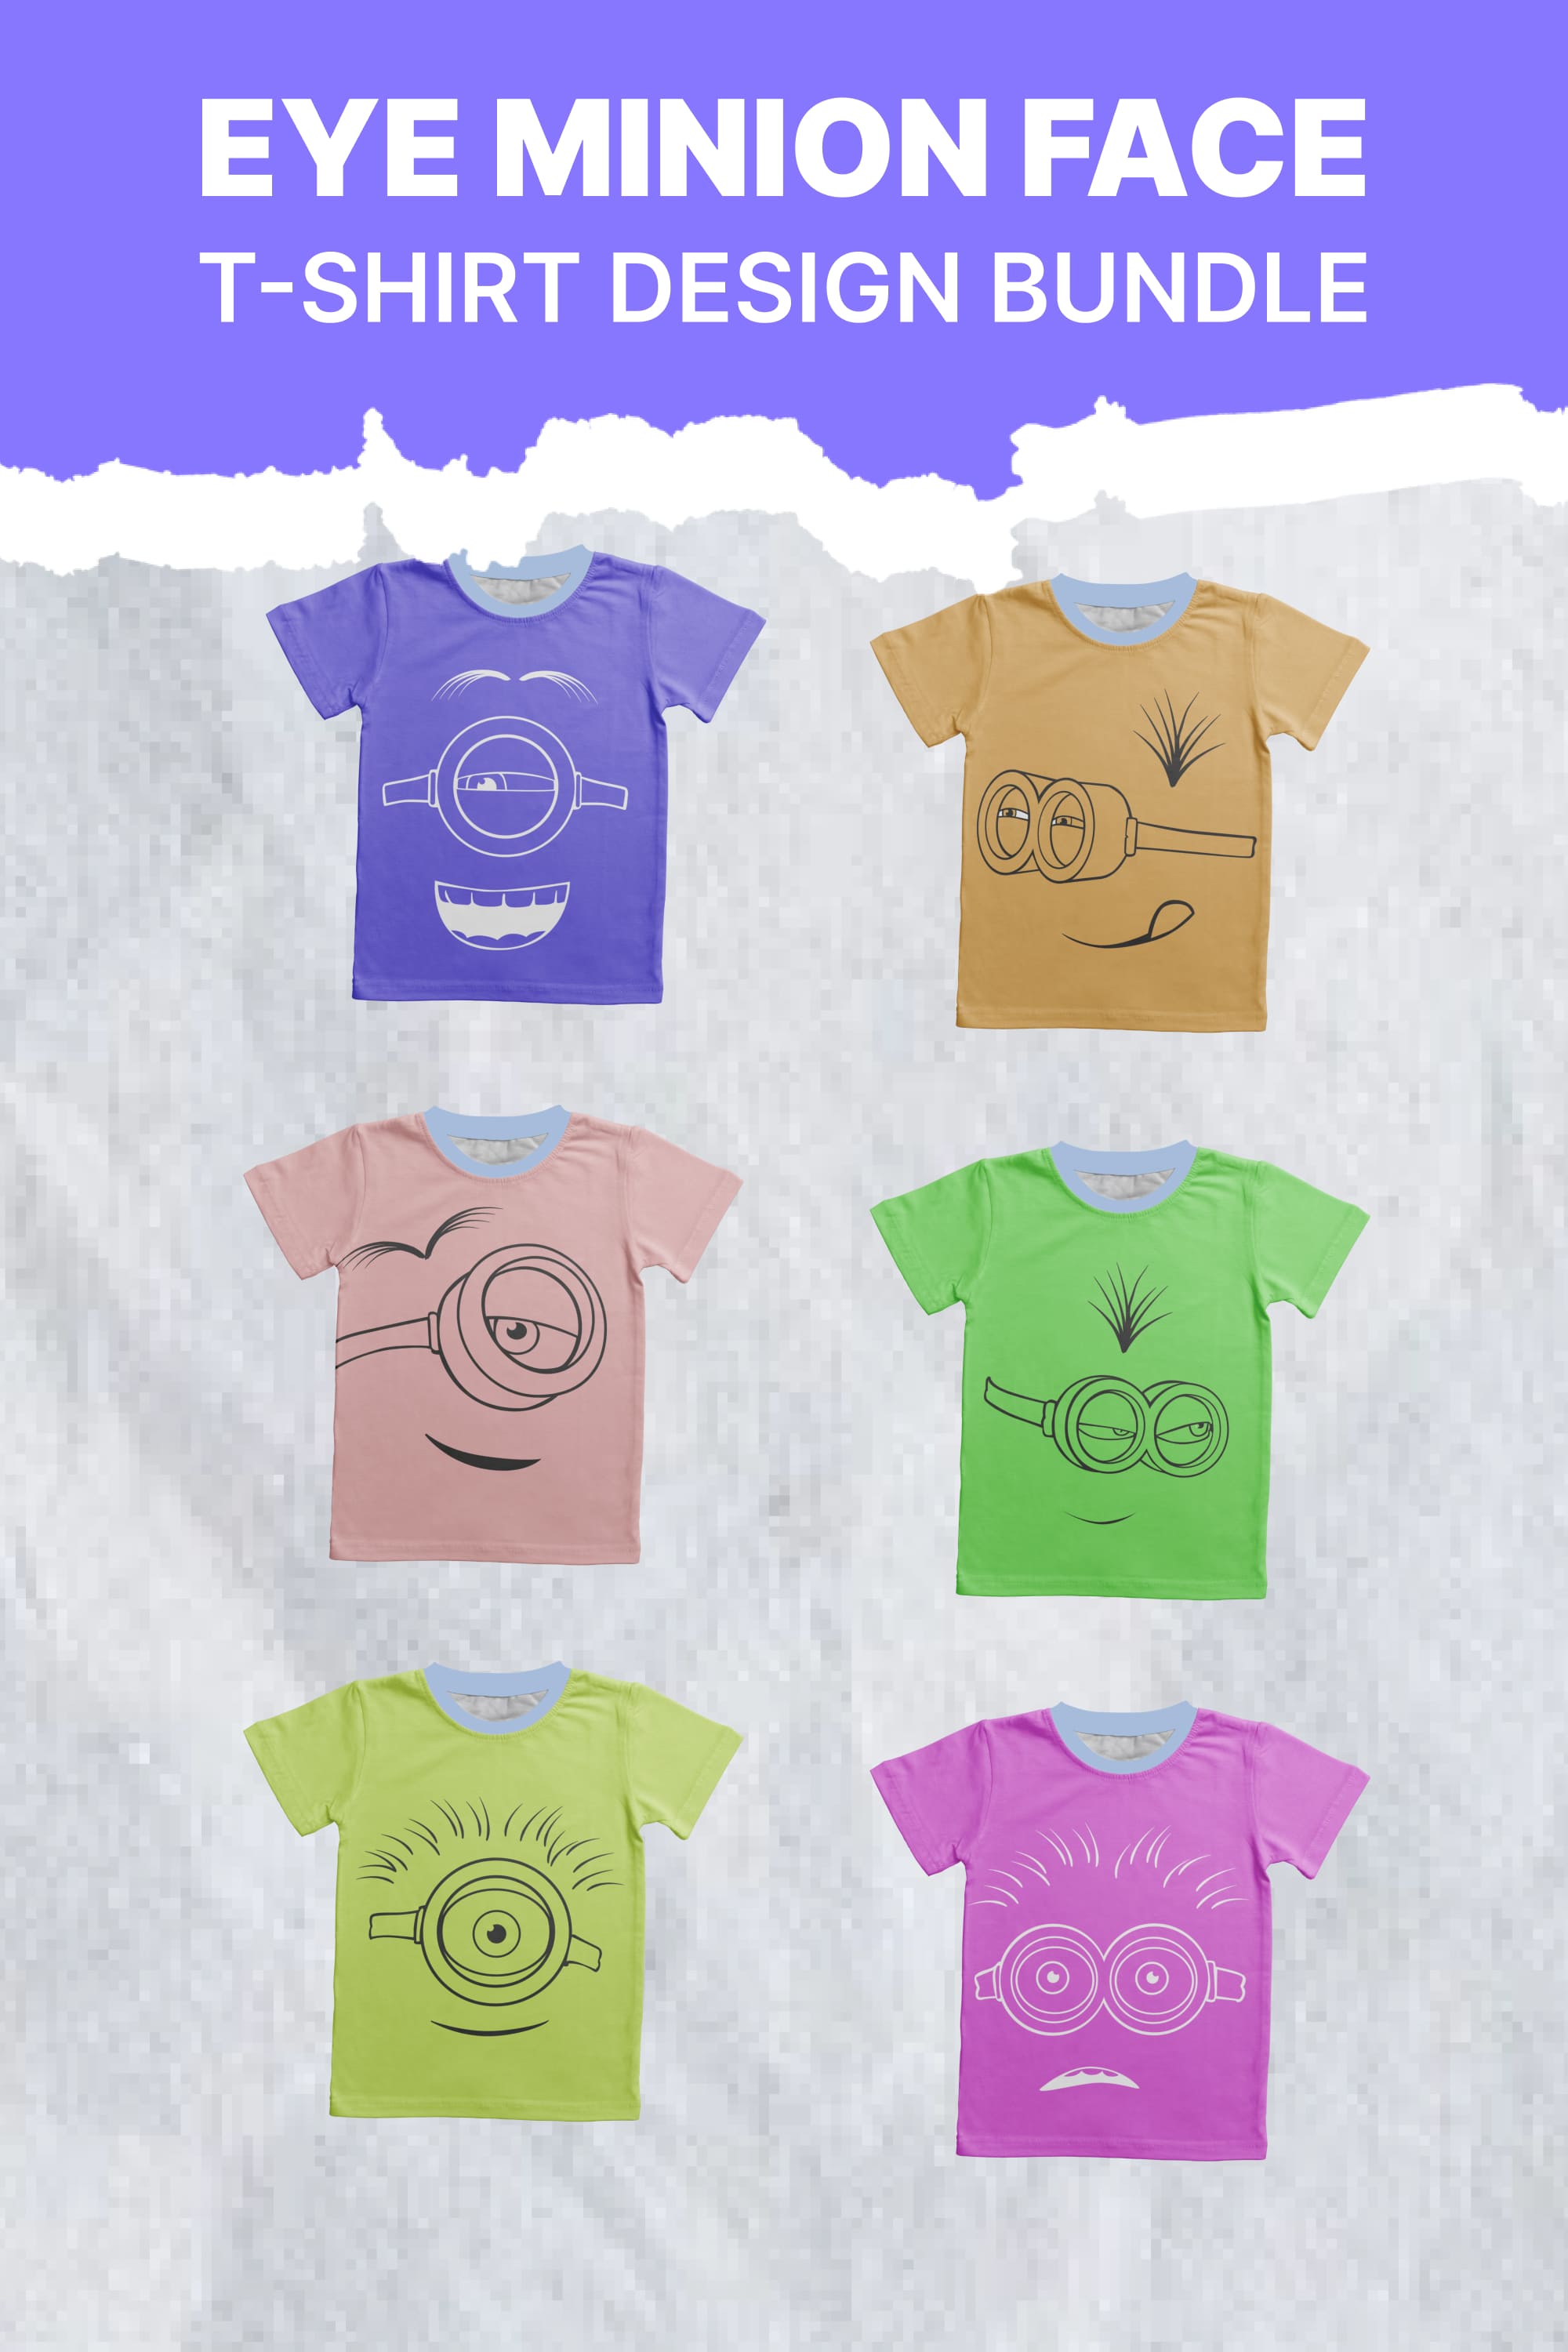 Eye Minion Face T-shirt Designs - Pinterest.